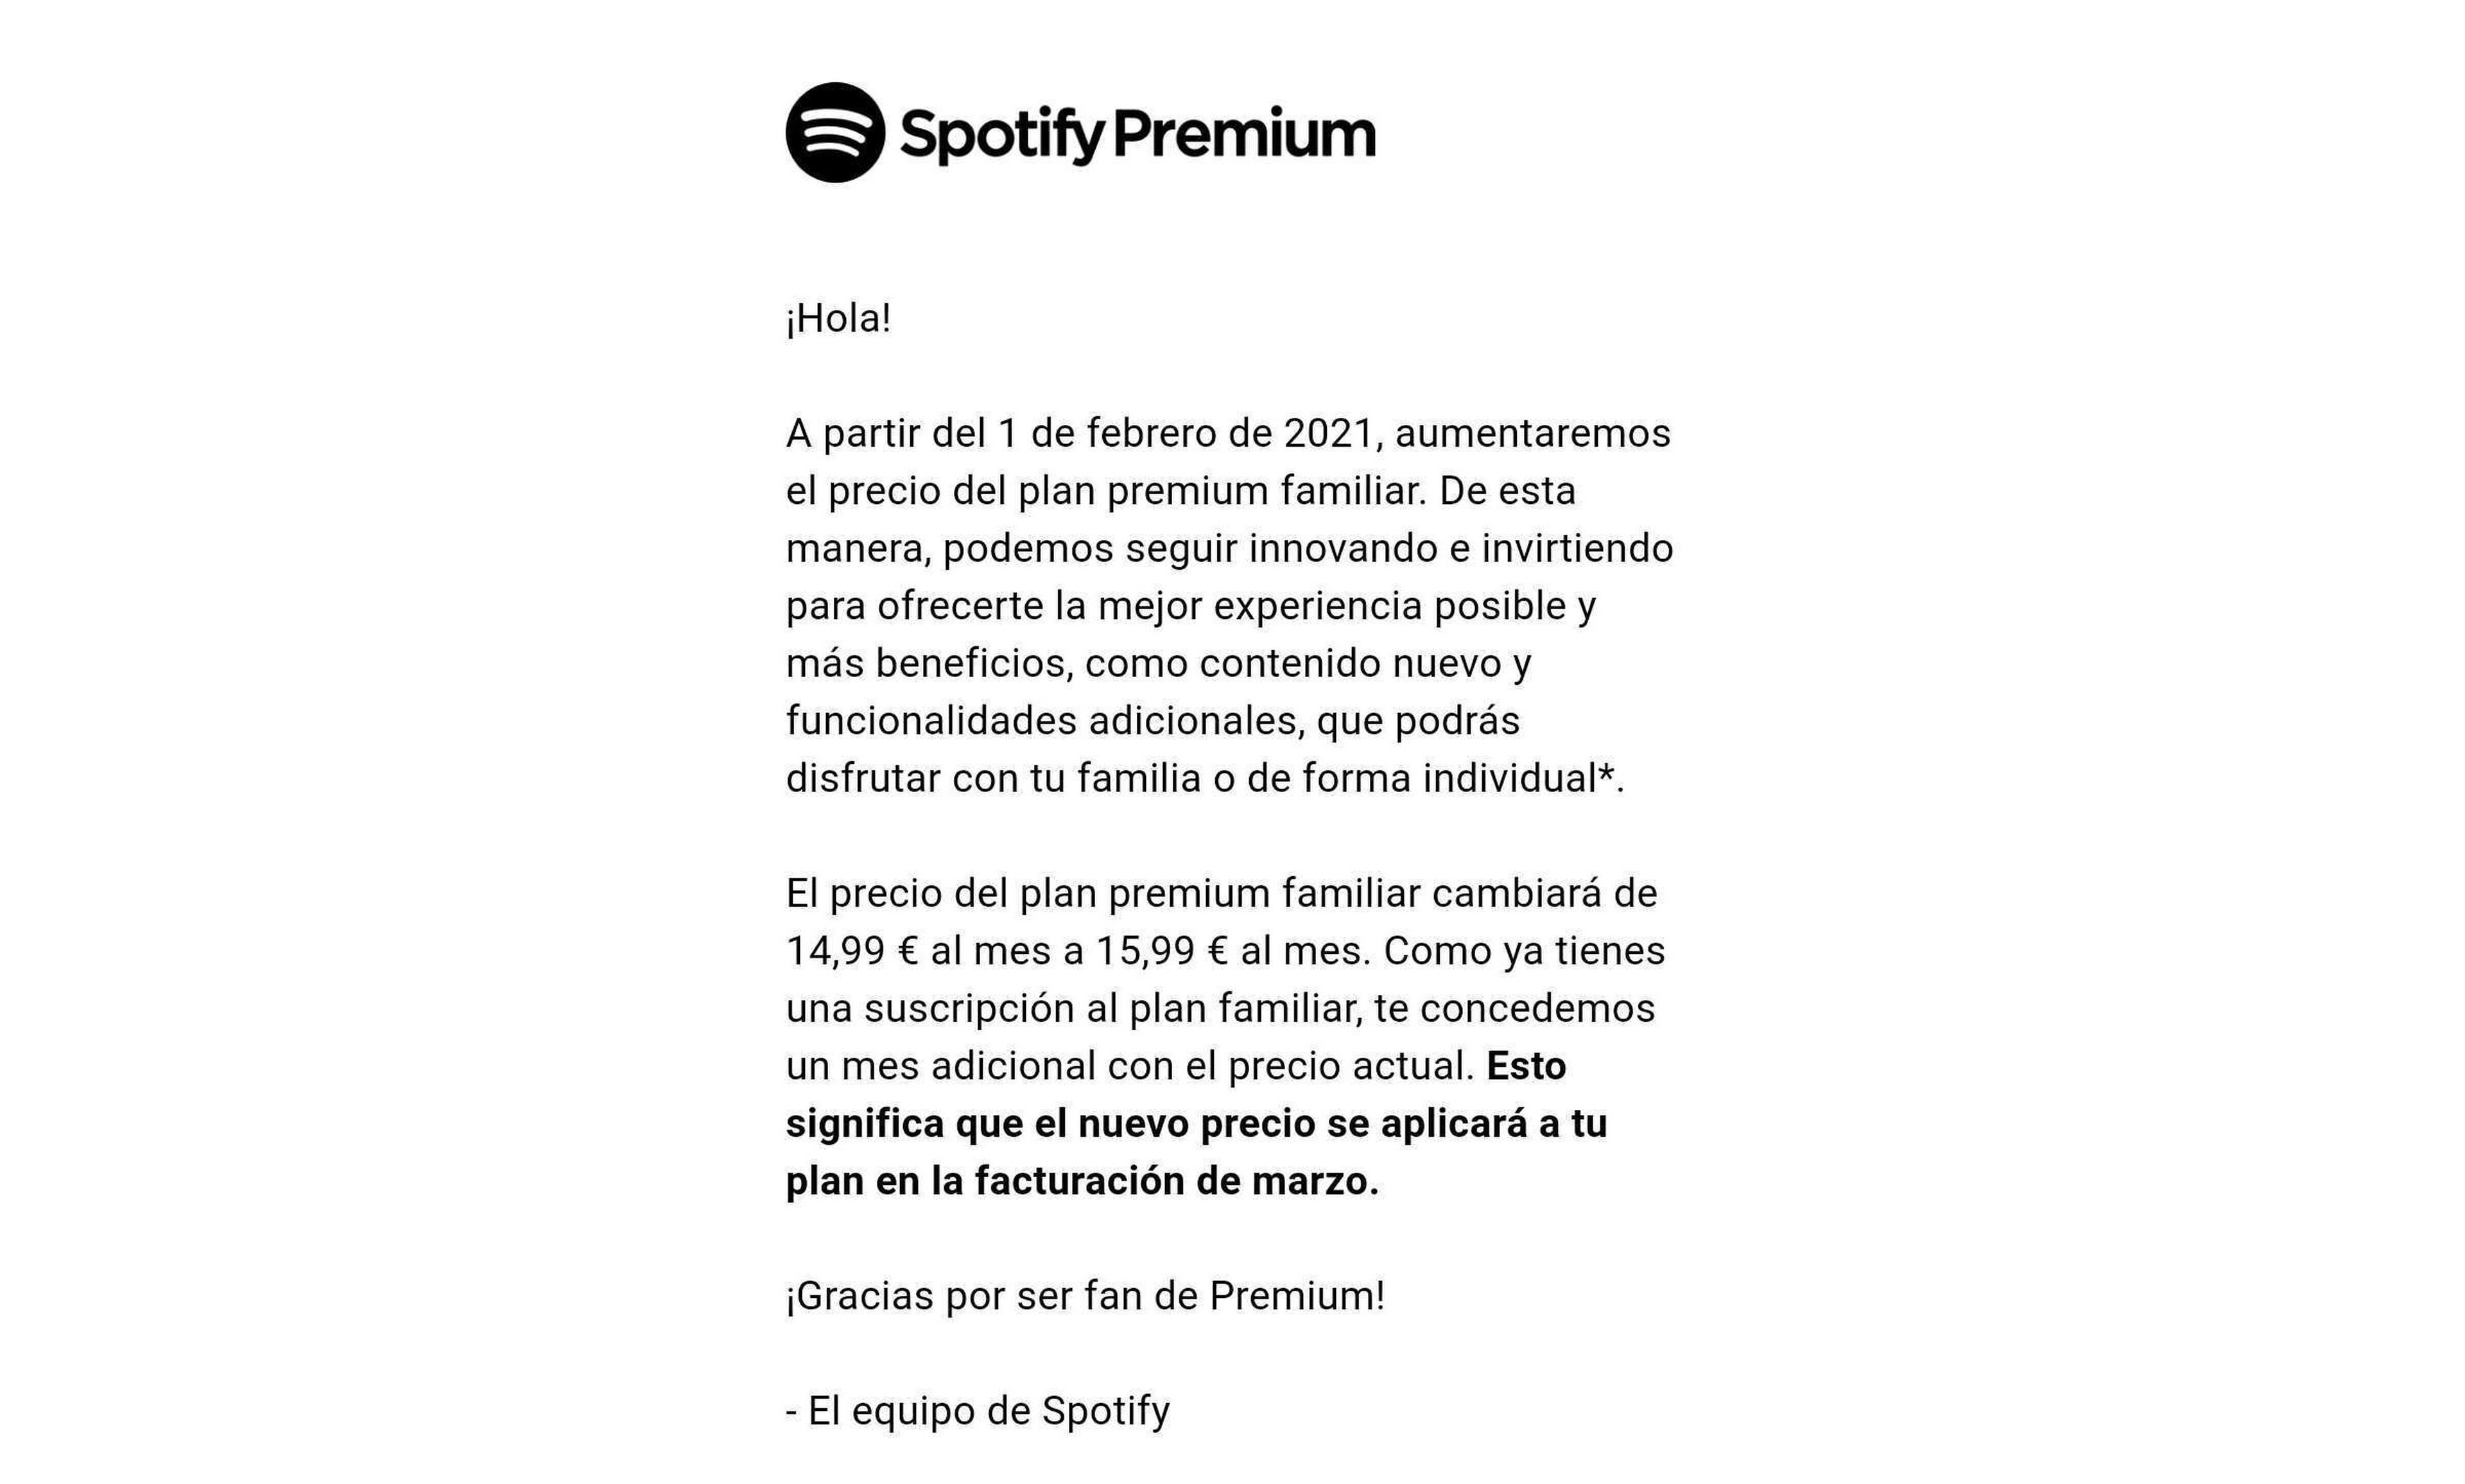 Spotify Premium sube de precio del plan premium familiar a partir del 1 de febrero